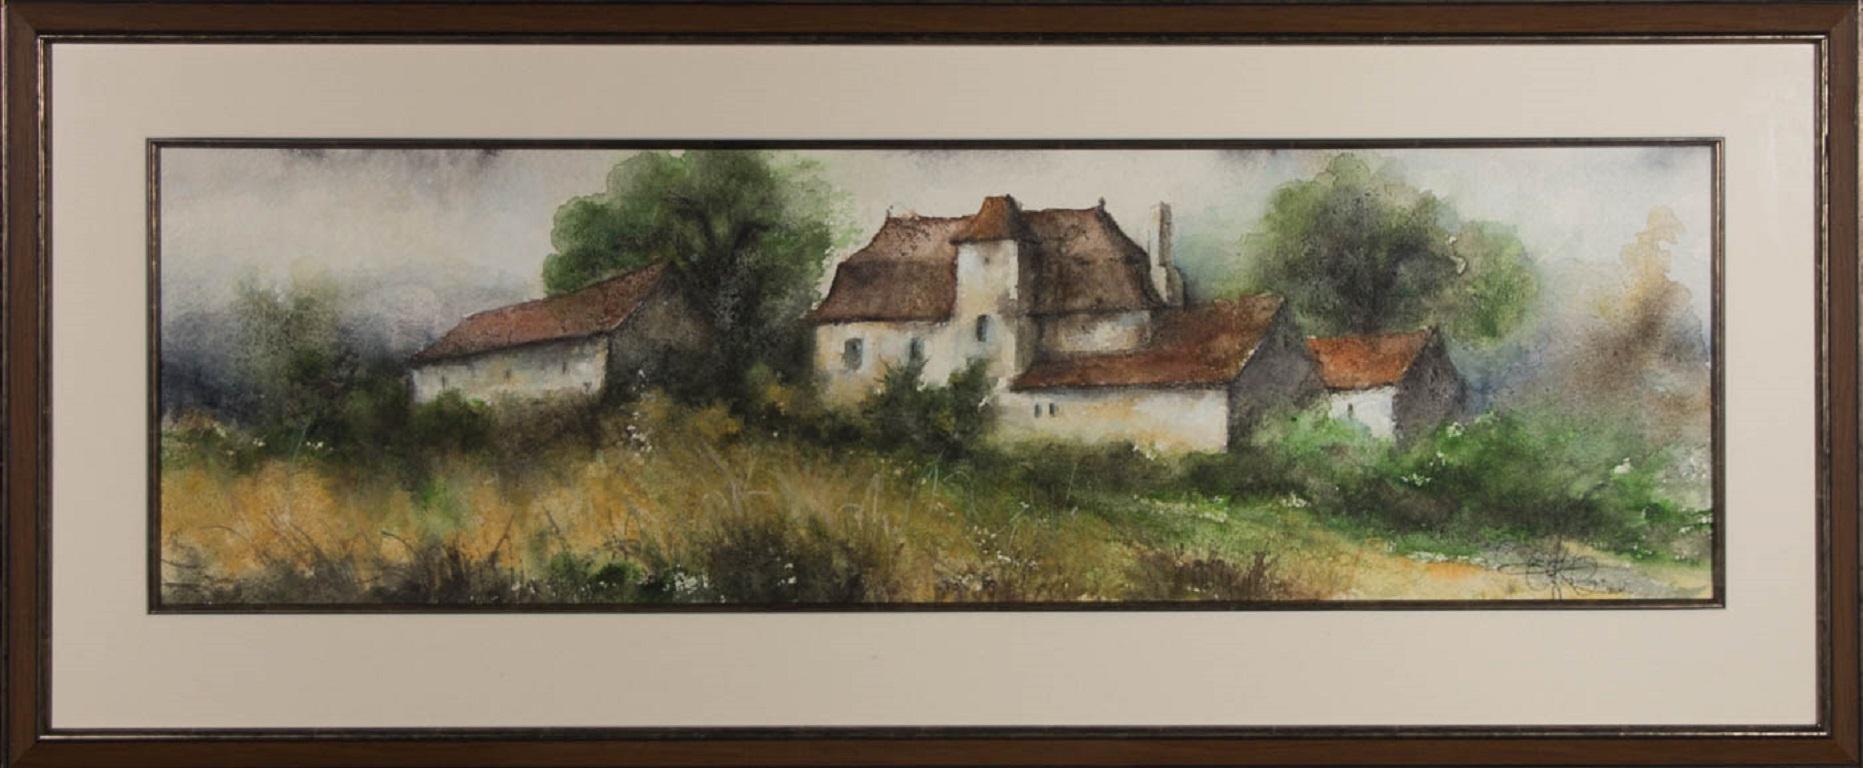 Unknown Landscape Art - 20th Century Watercolour - French Farmstead